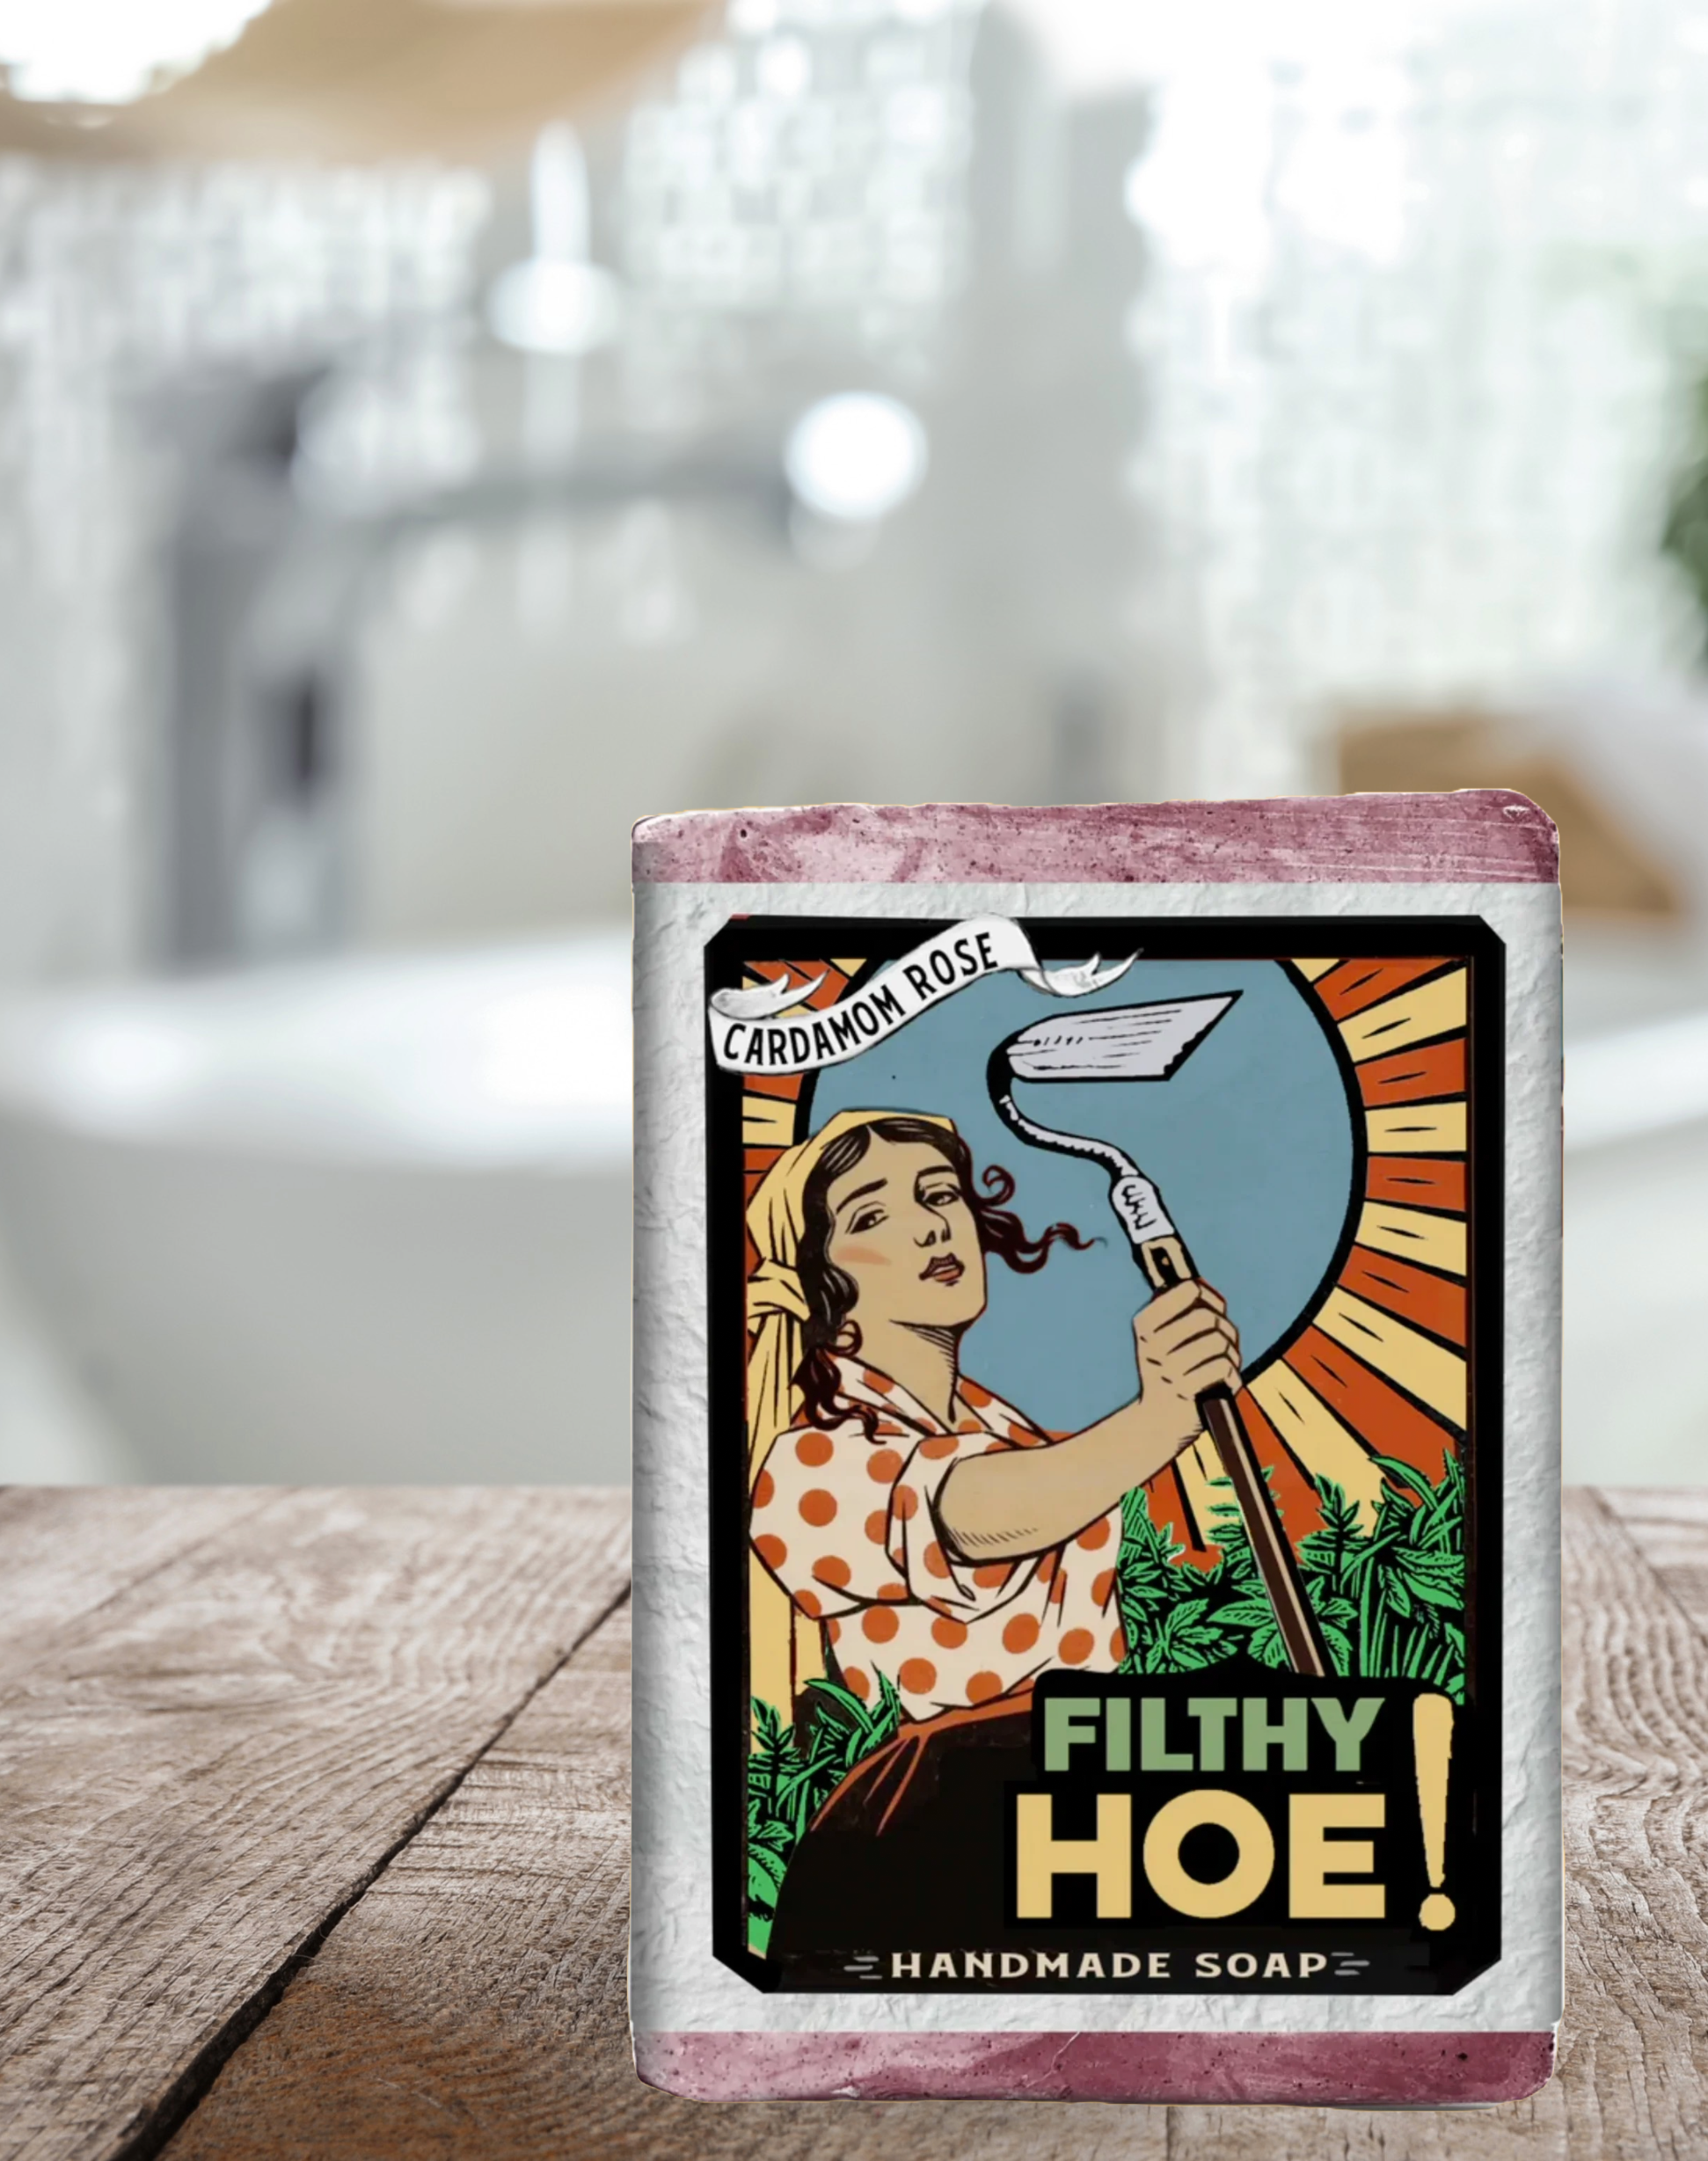 Filthy Hoe Soap | Cardamom Rose | Filthy Farm Girl